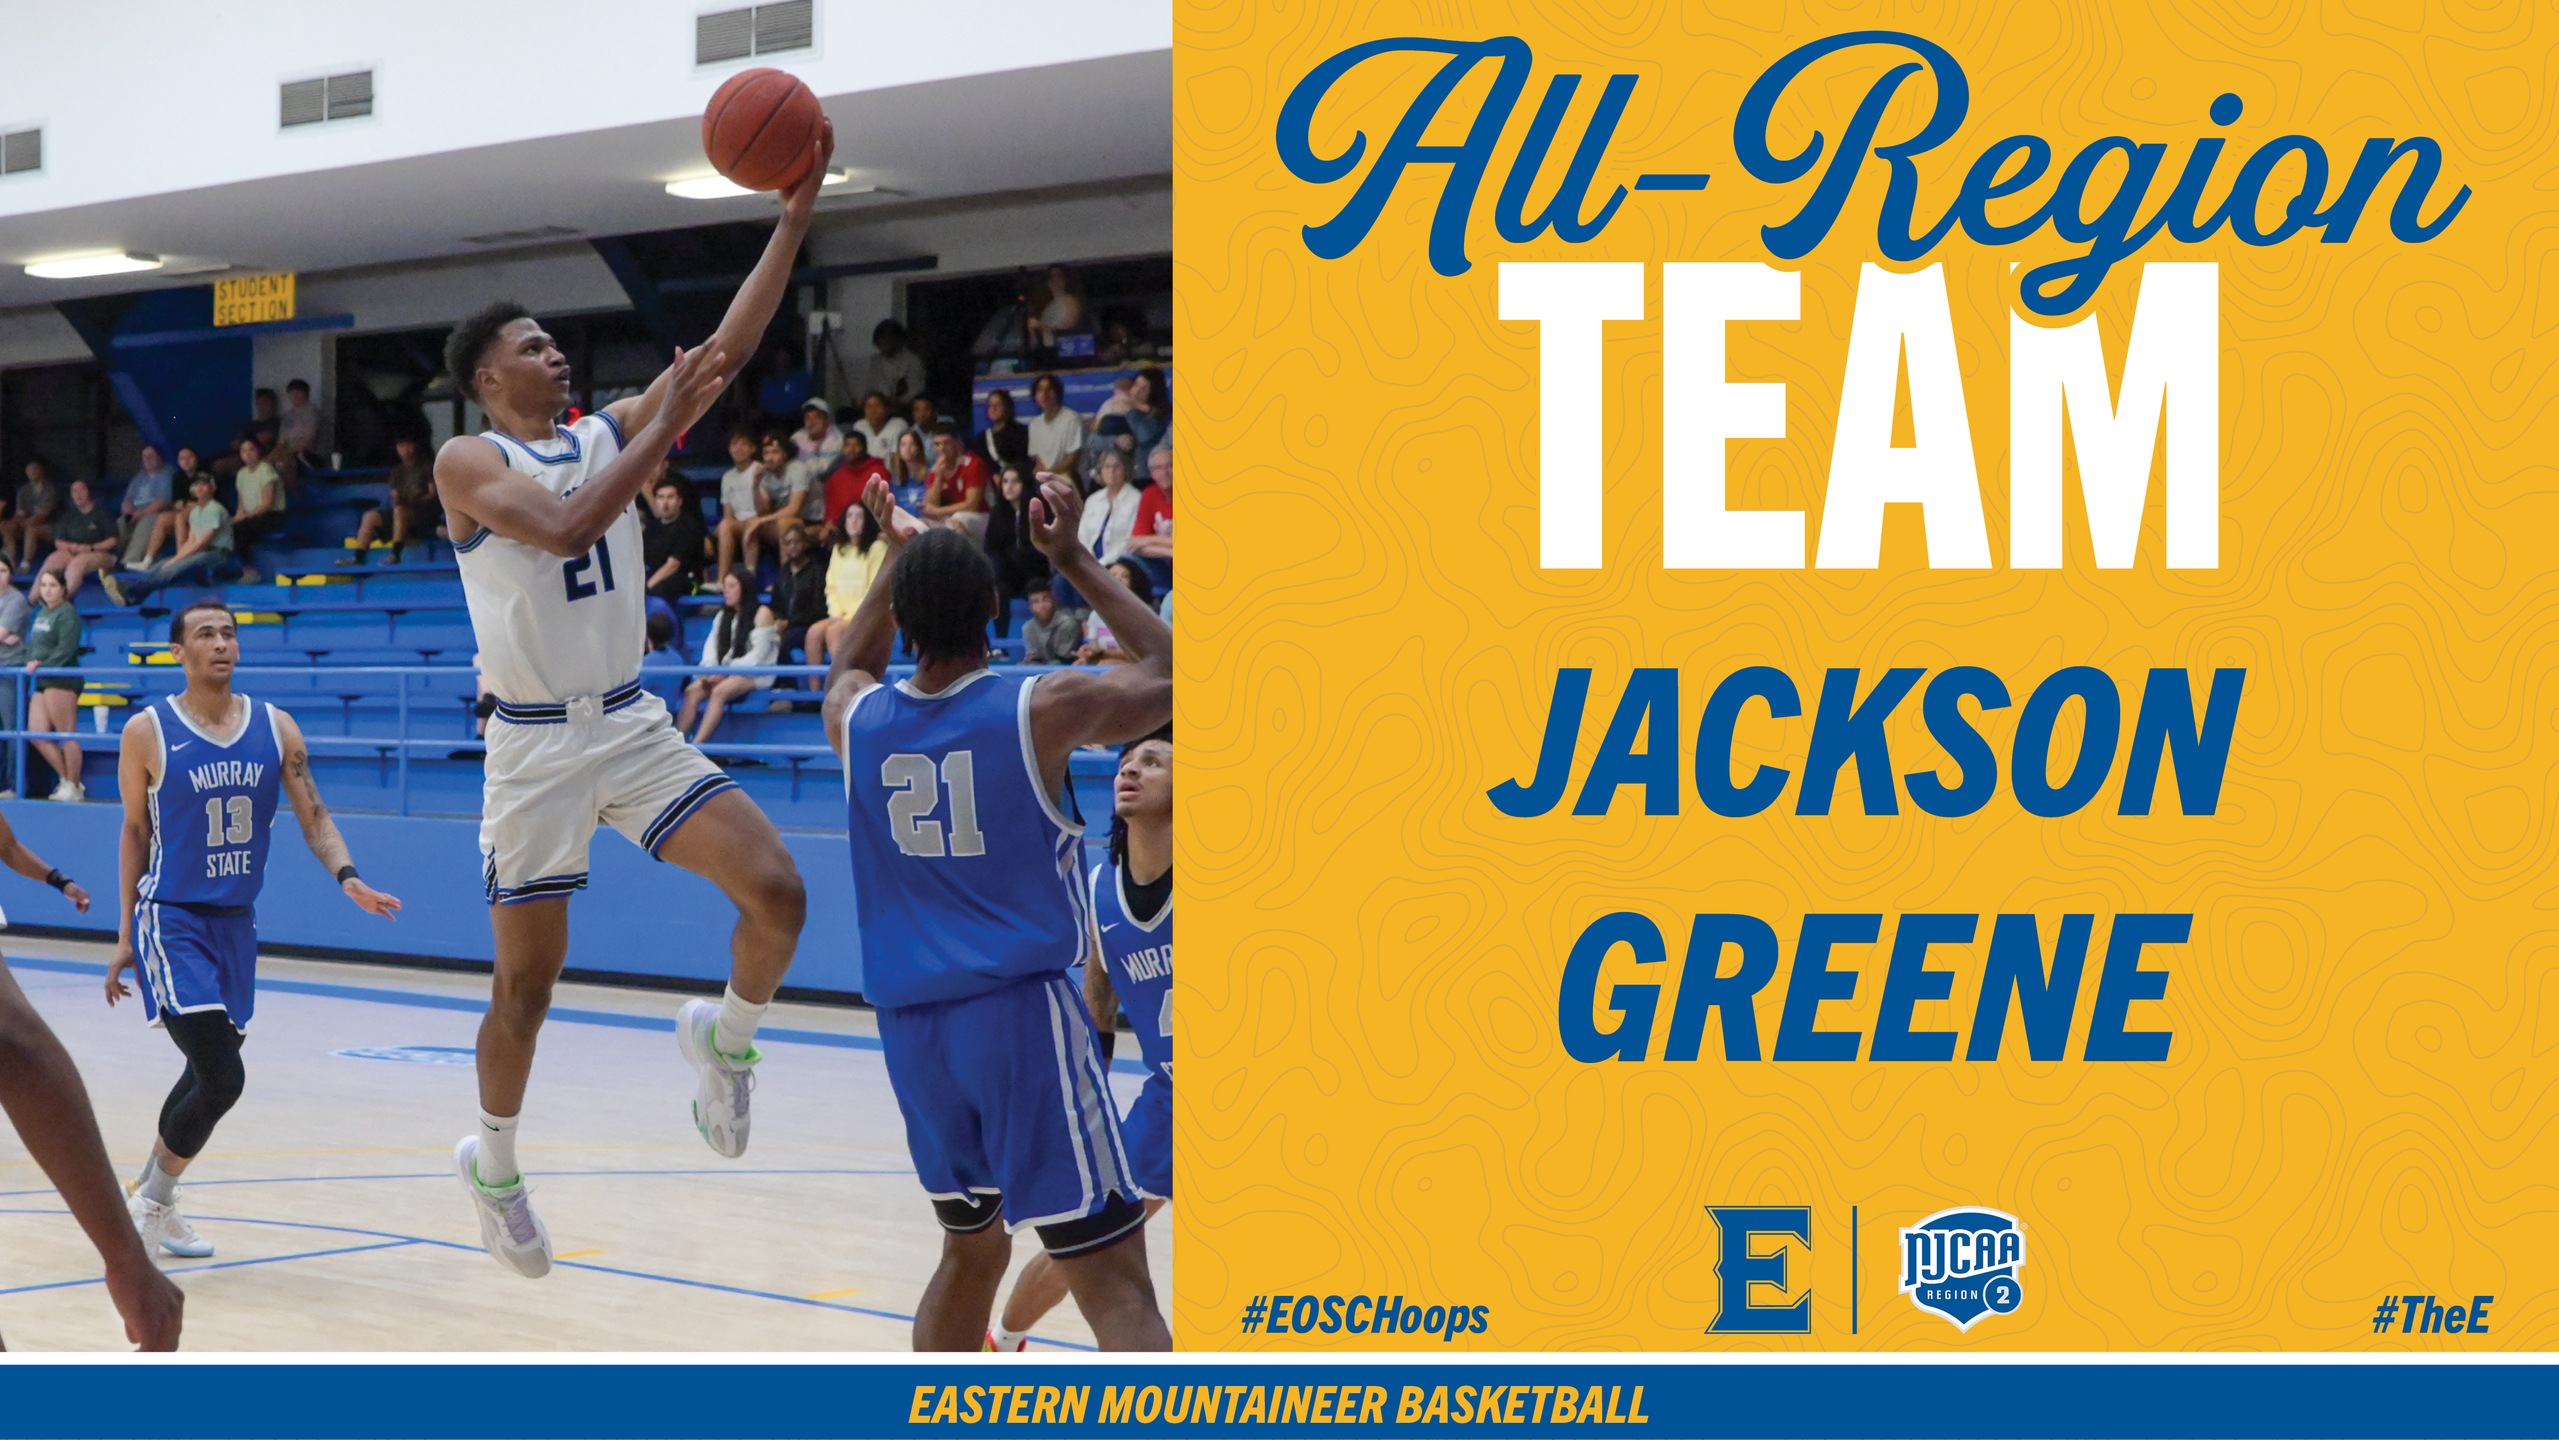 Jackson Greene Named to All-Region Team